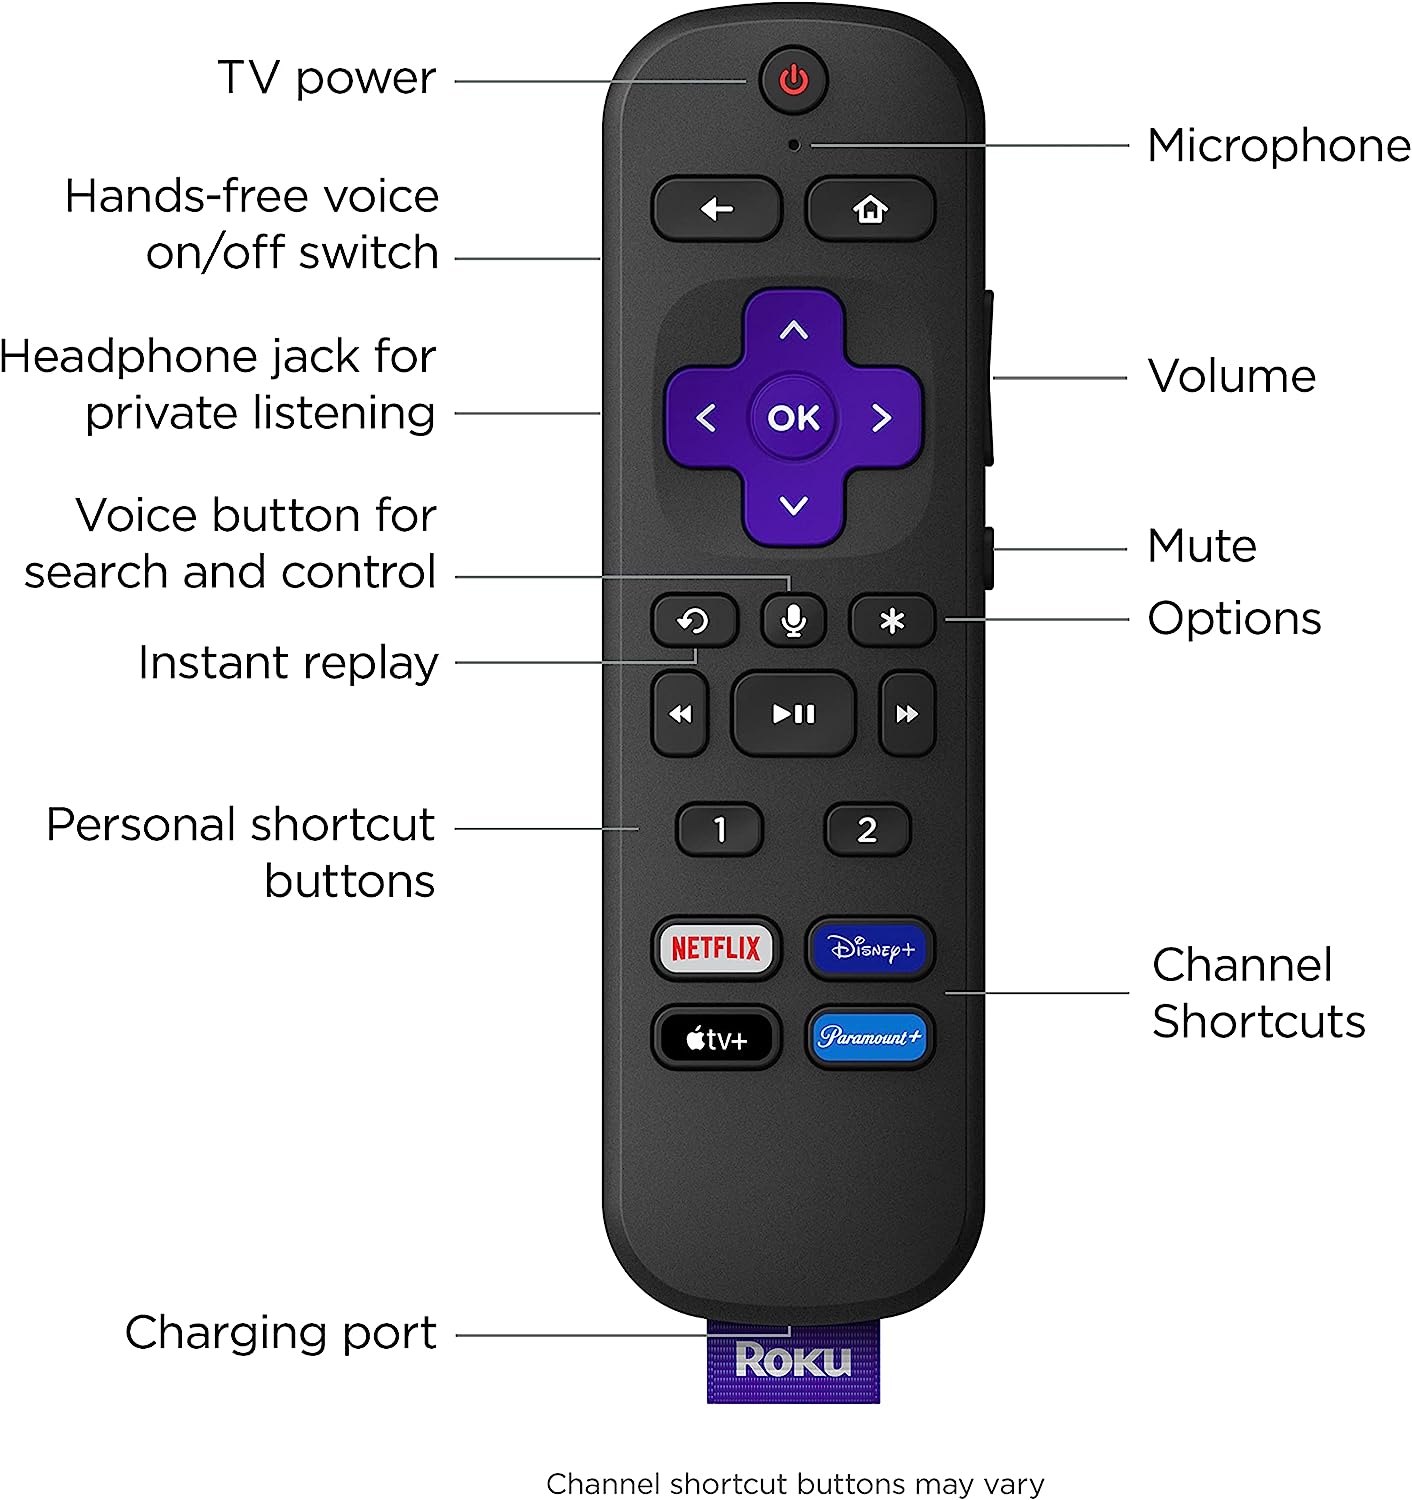 Roku Voice Remote Pro - Replacement Remote Control